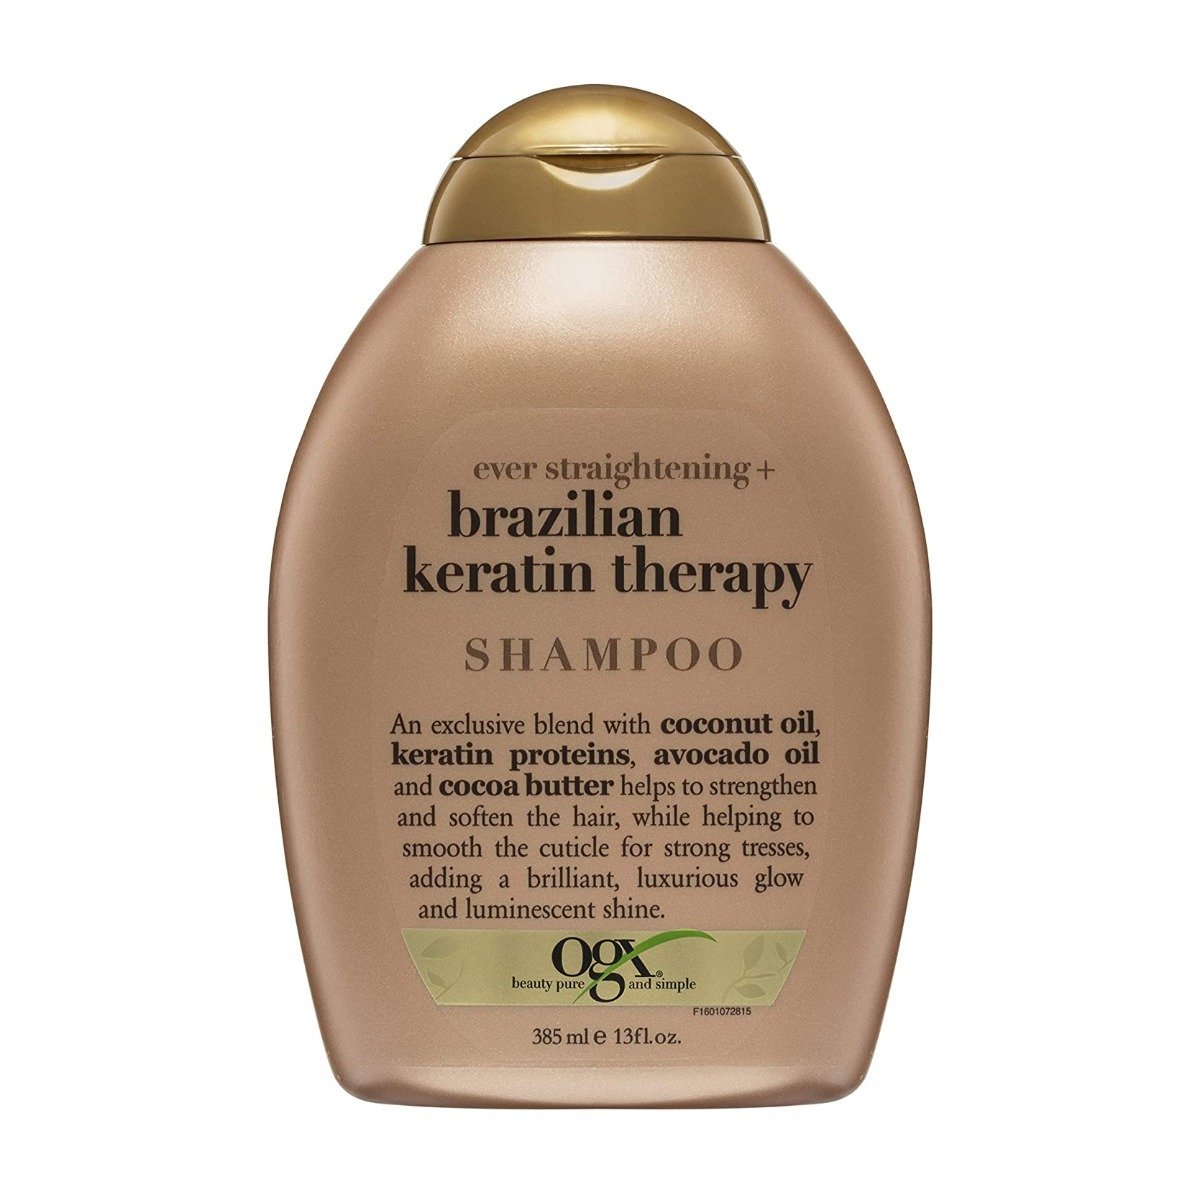 Ogx Ever Straightening+ Brazilian Keratin Therapy Shampoo - 385ml - Bloom Pharmacy